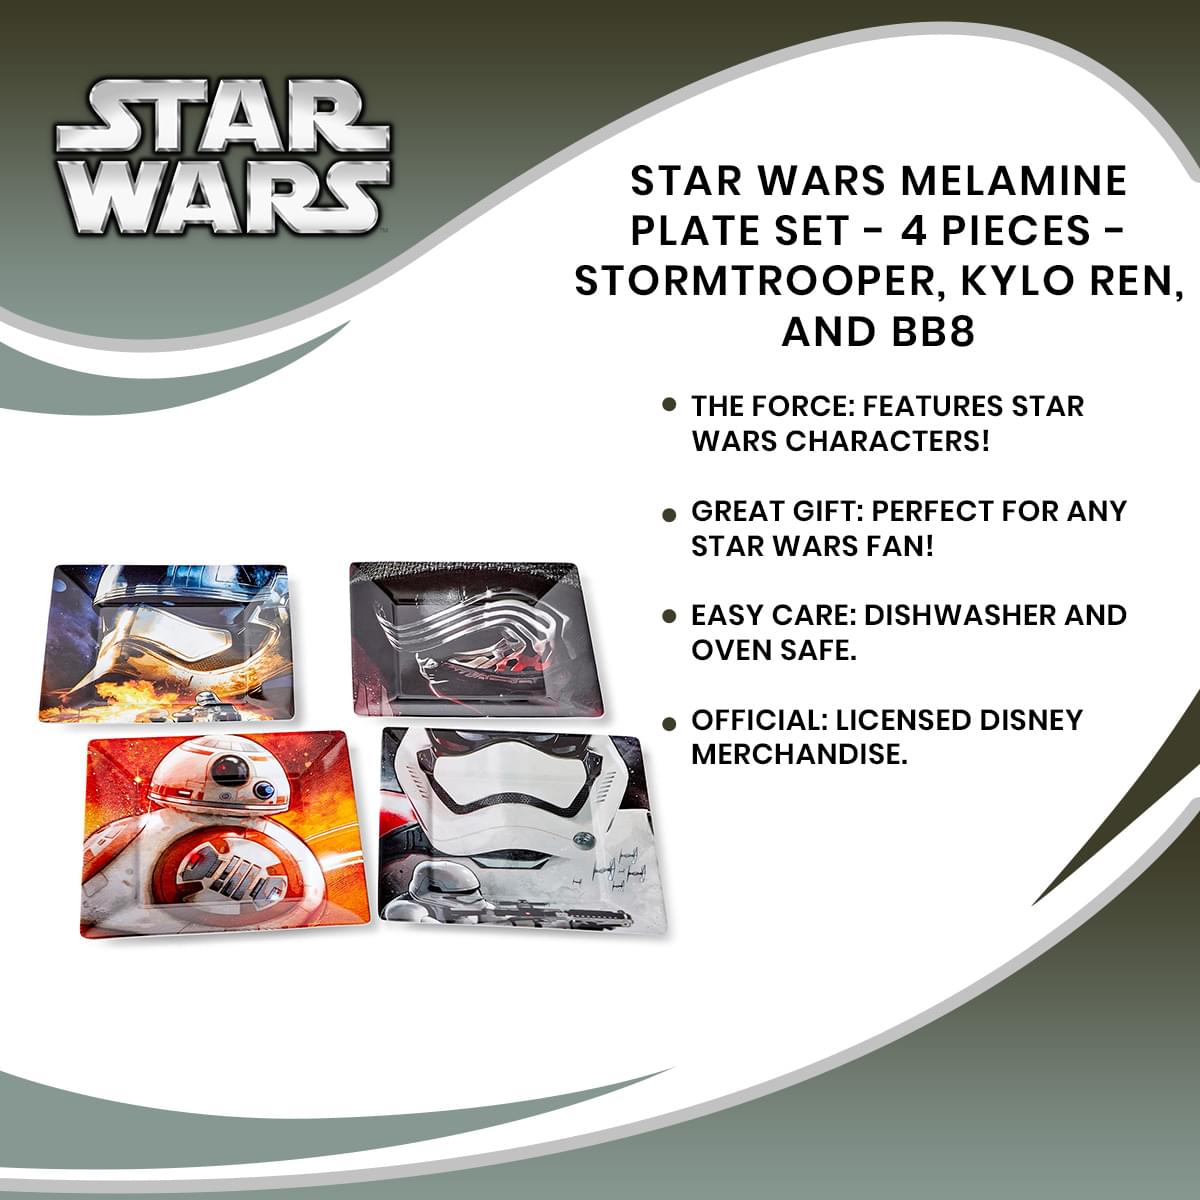 Star Wars Melamine Plate Set - 4 Pieces - Stormtrooper, Kylo Ren, and BB8